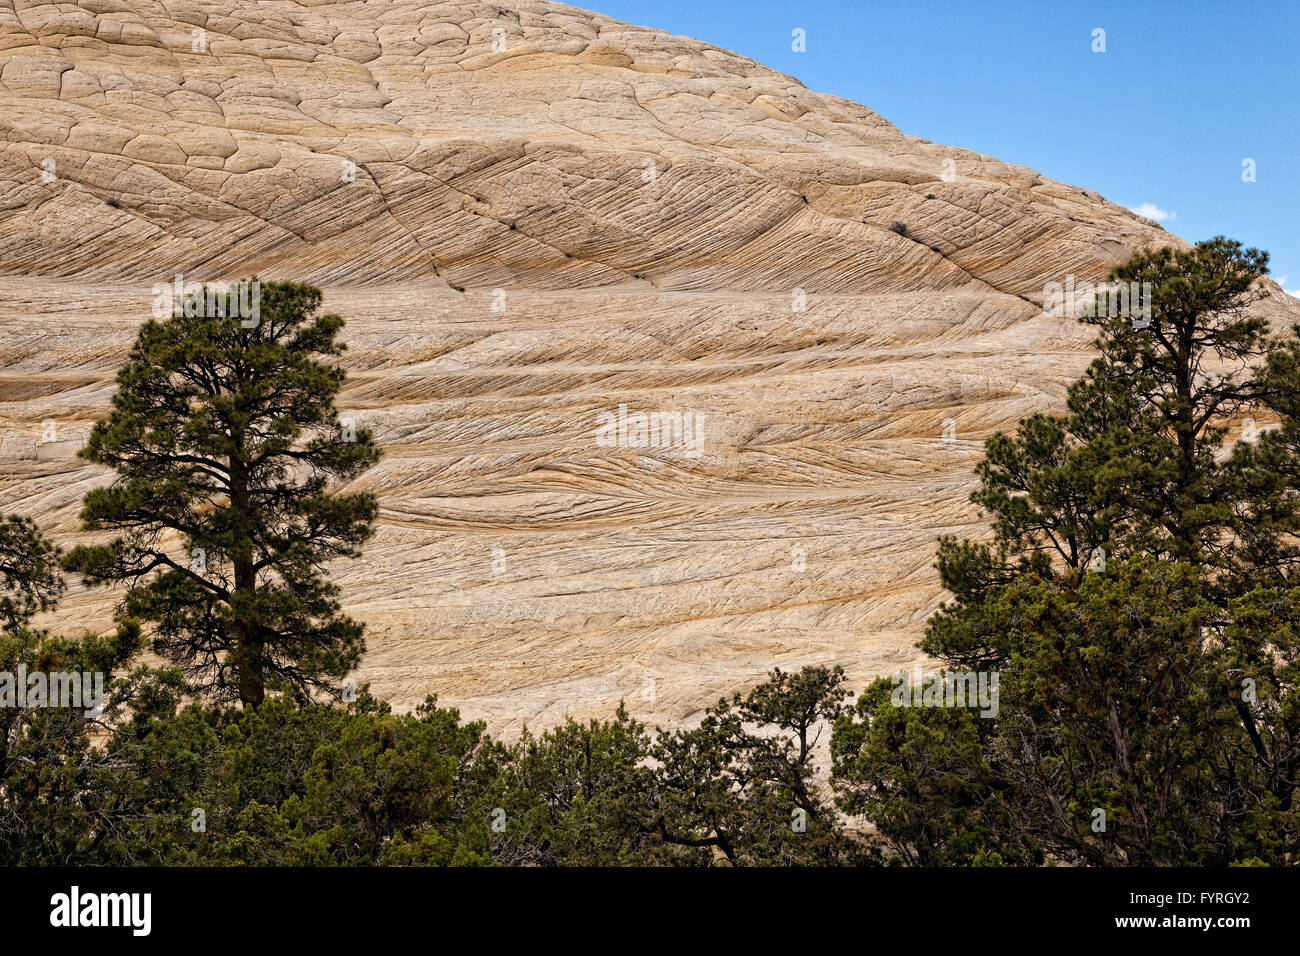 Cross Bedding Sandstone - Capitol Reef NP - Utah Stock Photo